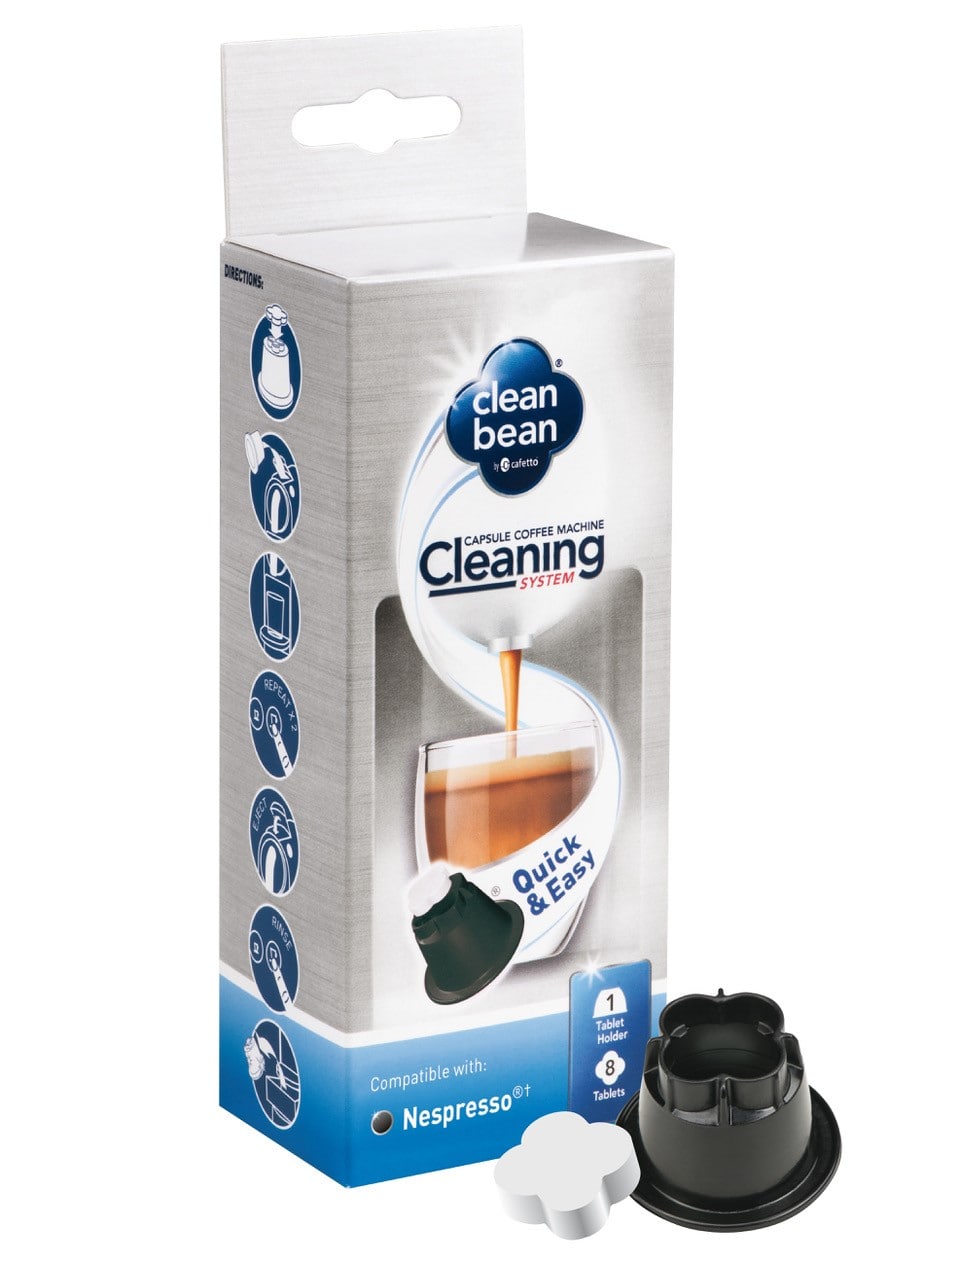 CLEAN BEAN - Cleaning Capsule Coffee Machine